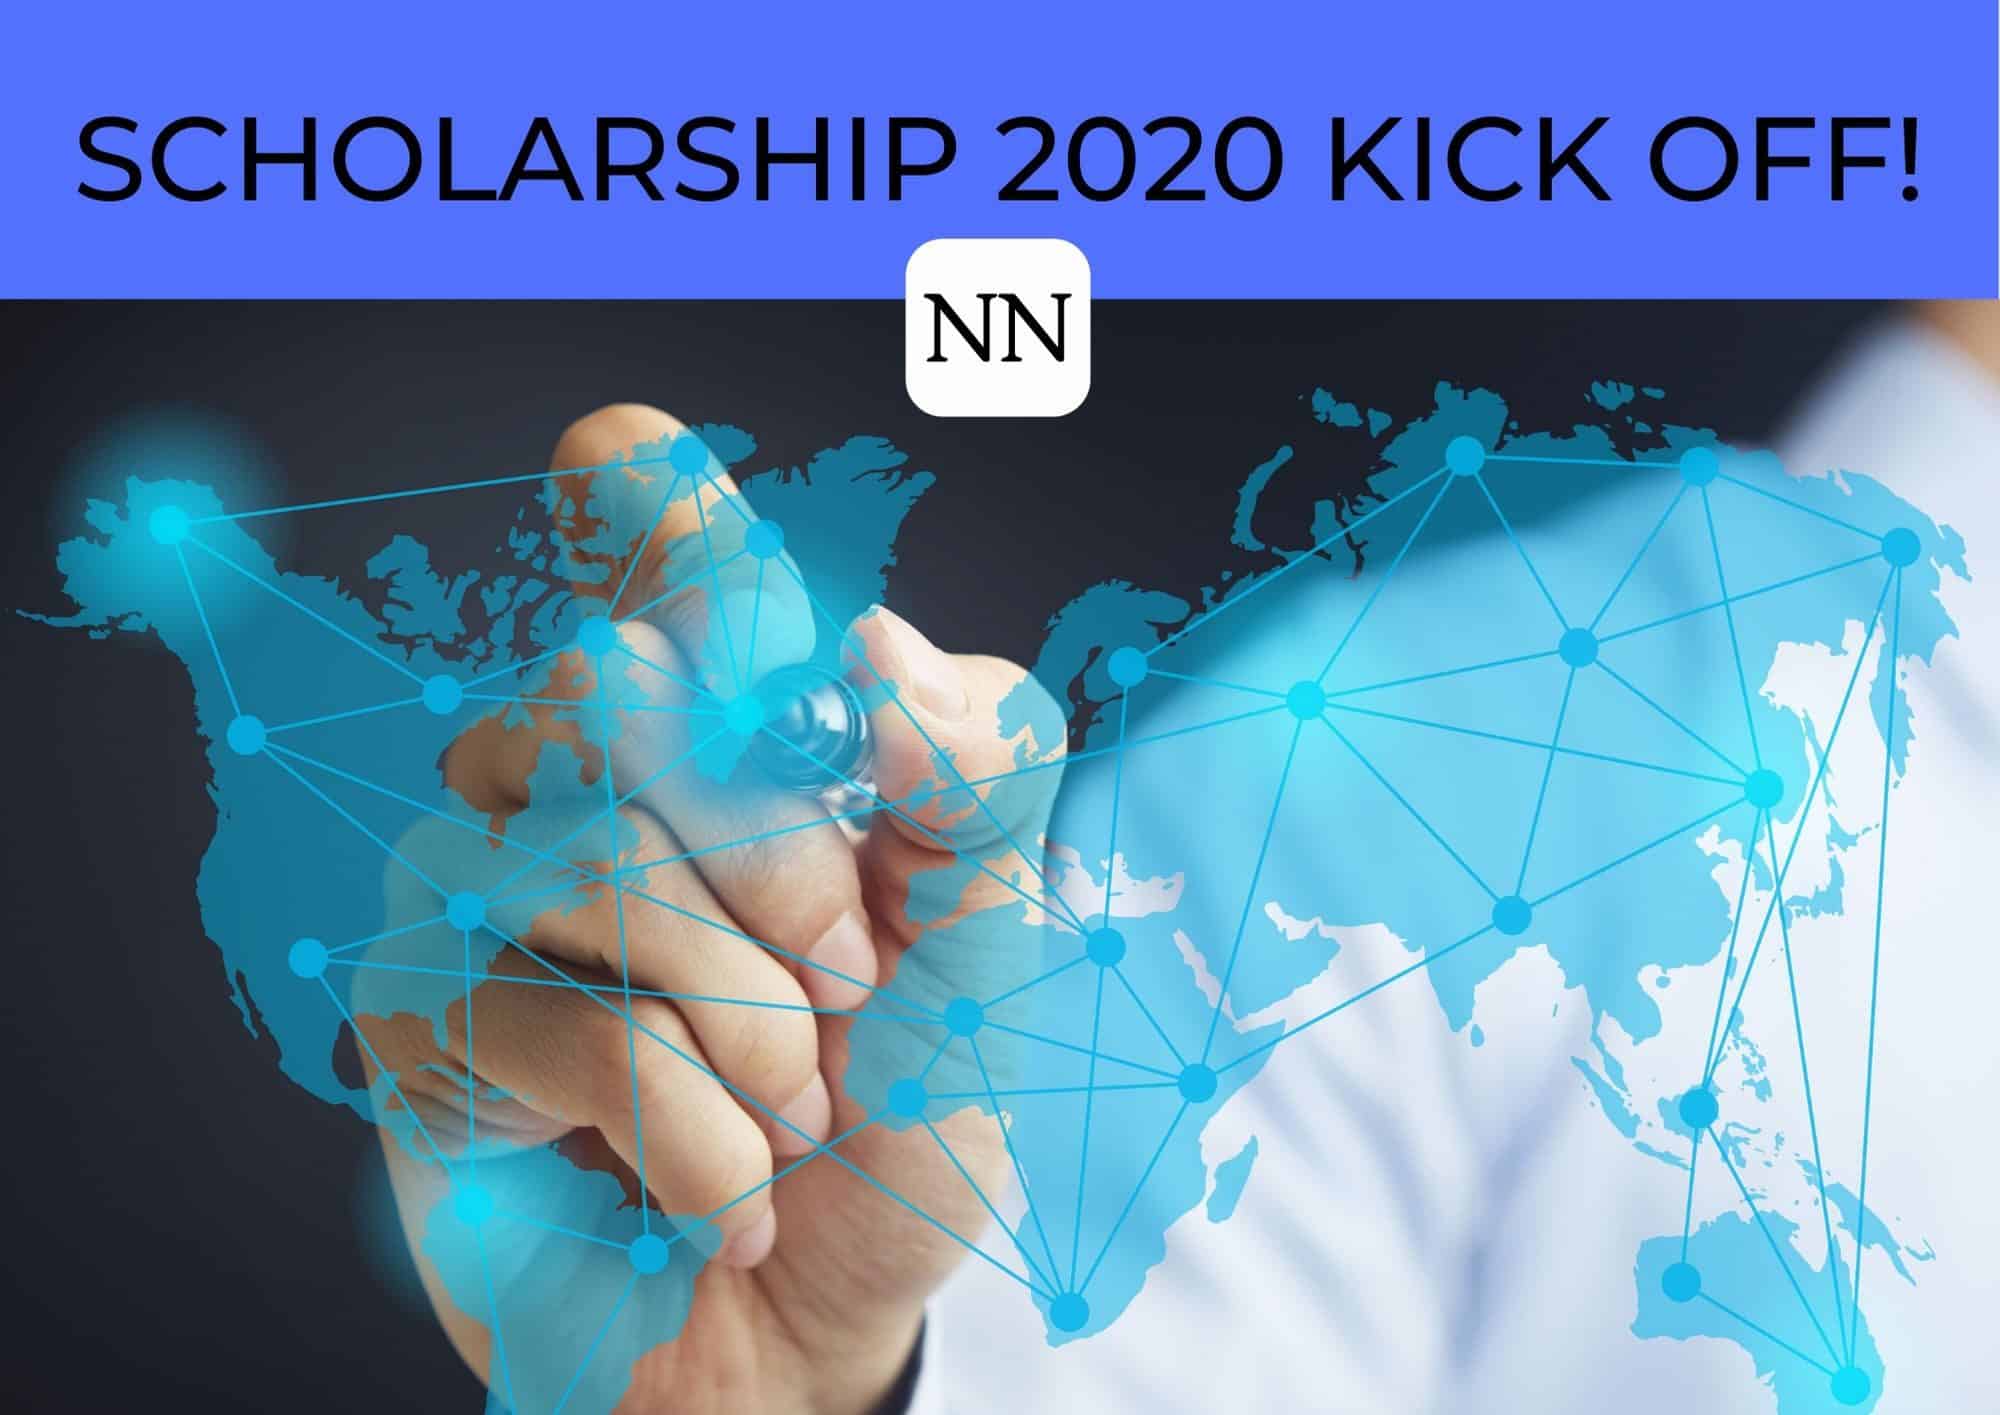 scholarship-2020-kick-off-1-1-e1582276258766